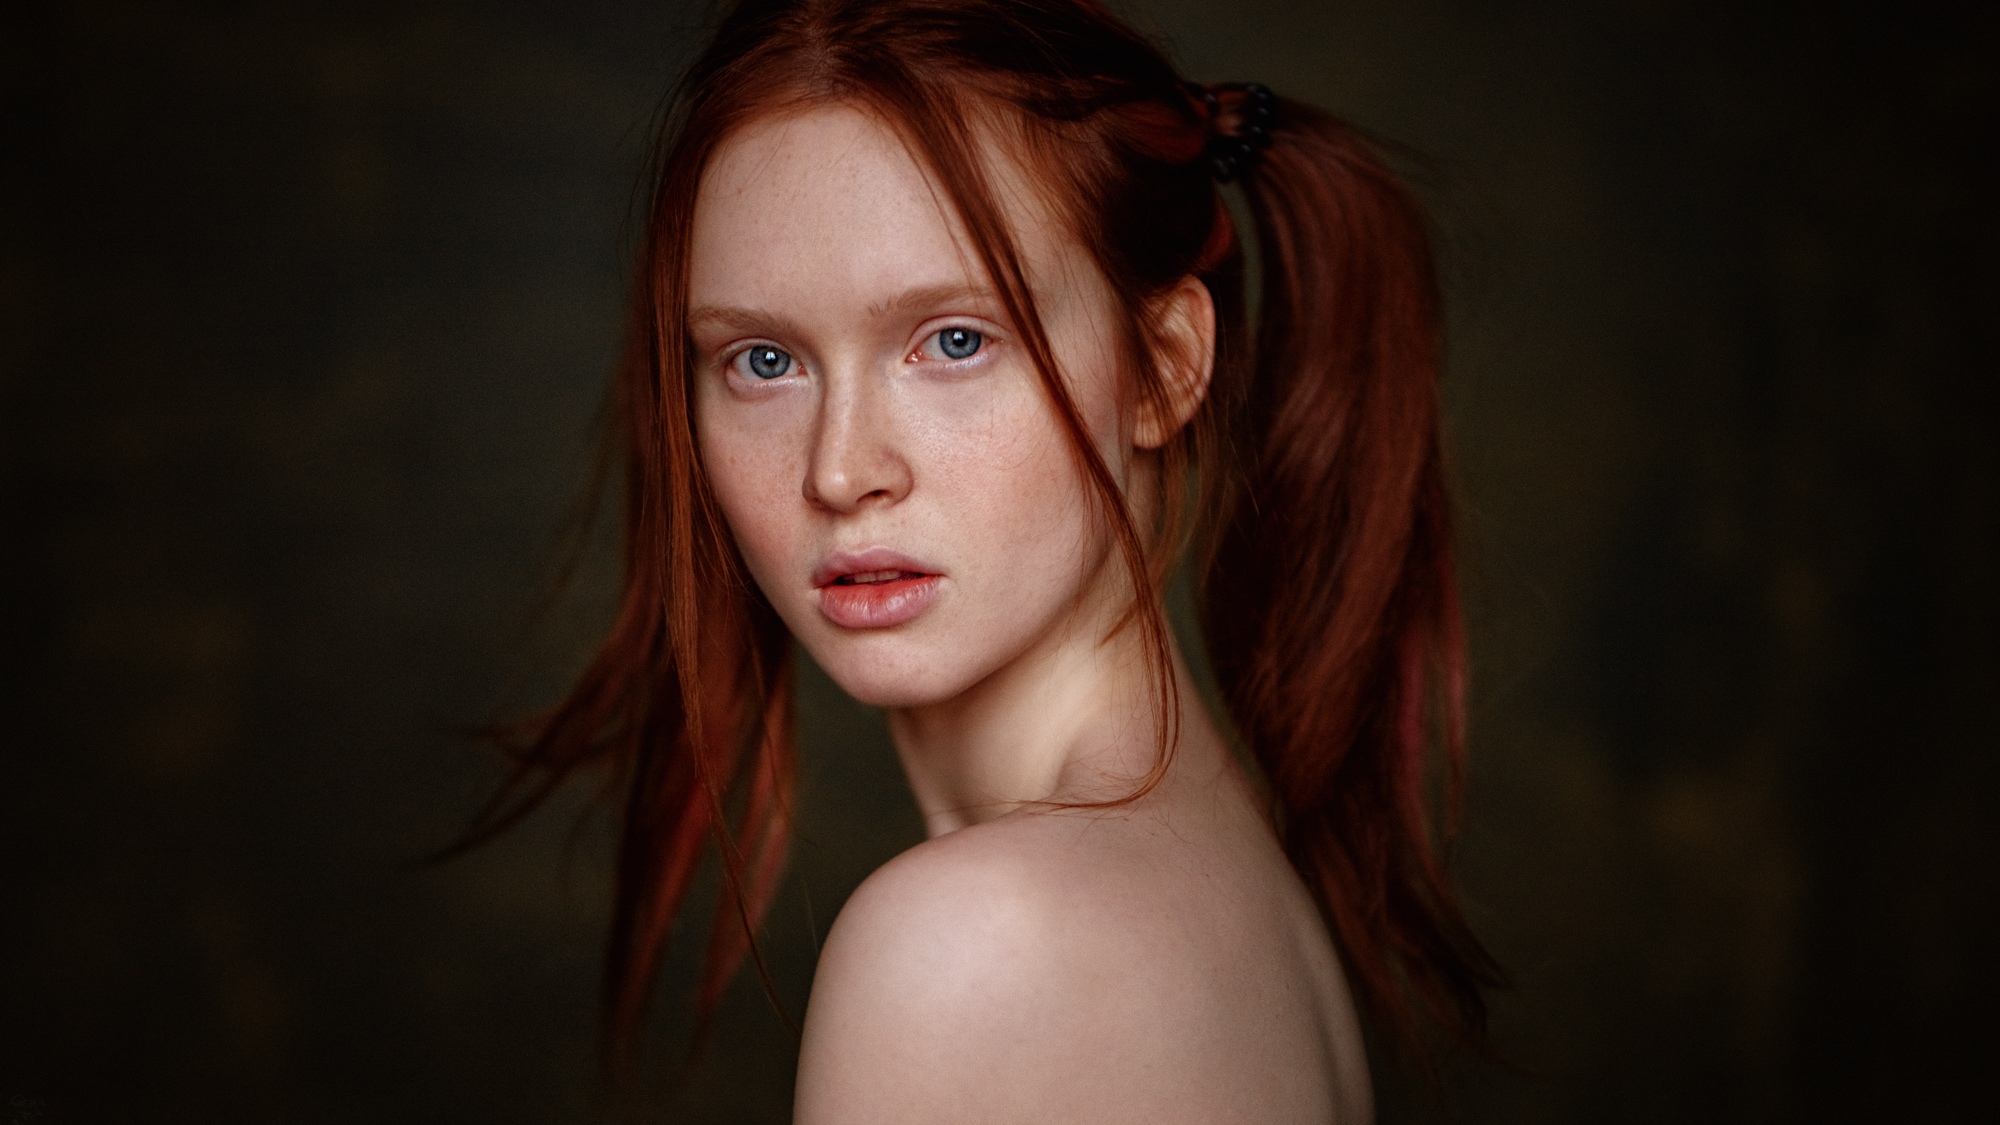 Arina Bikbulatova Women Redhead Model Pigtails Closeup Portrait Face Looking At Viewer Parted Lips B 2000x1125